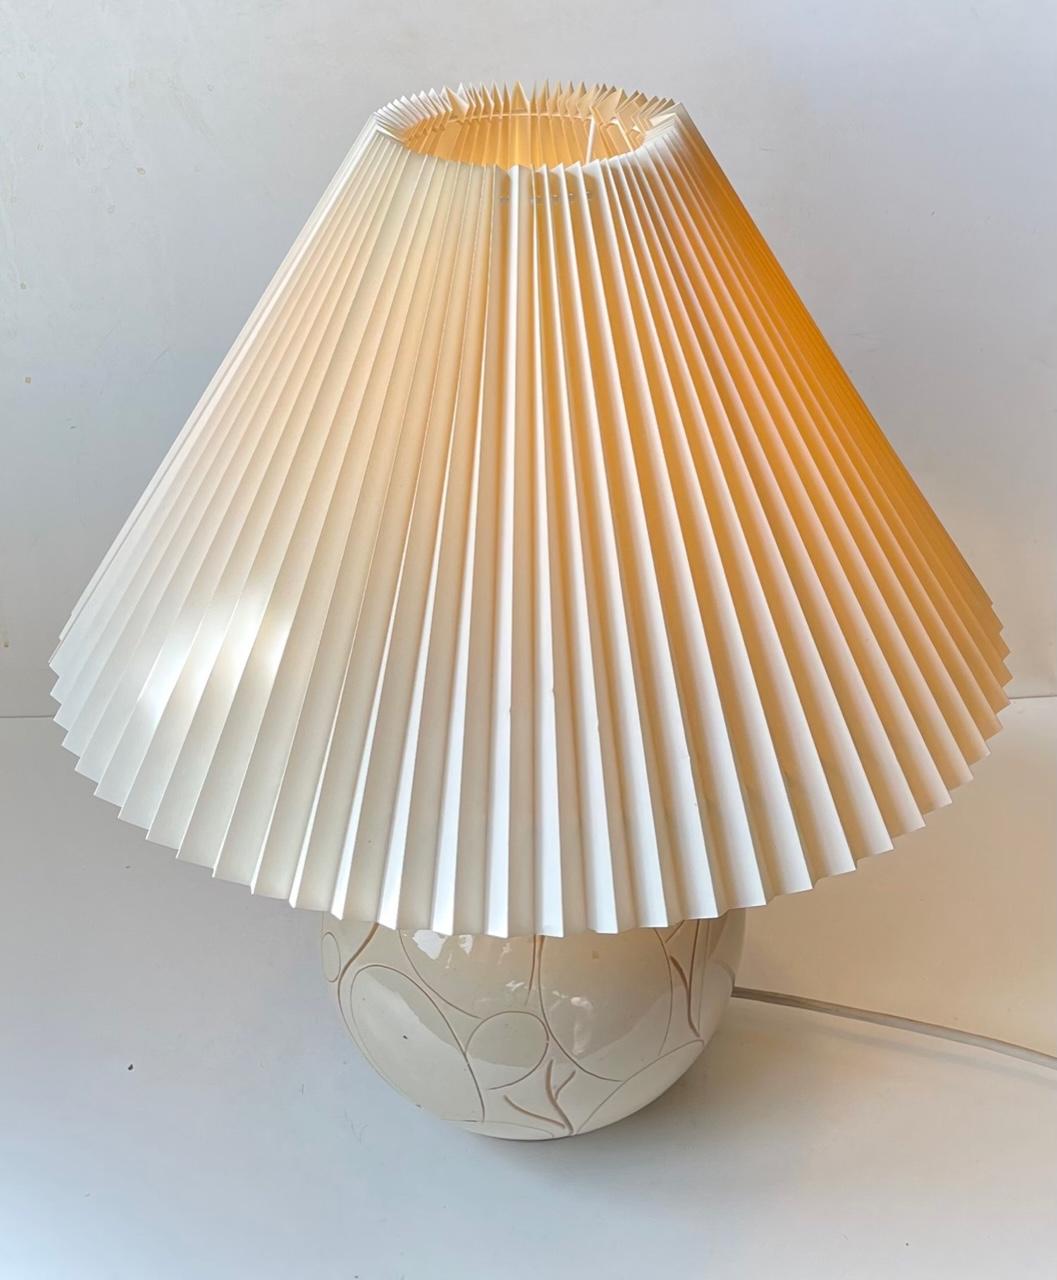 Danish Herman A. Kähler Ceramic Table Lamp in Creme Glaze, 1920s For Sale